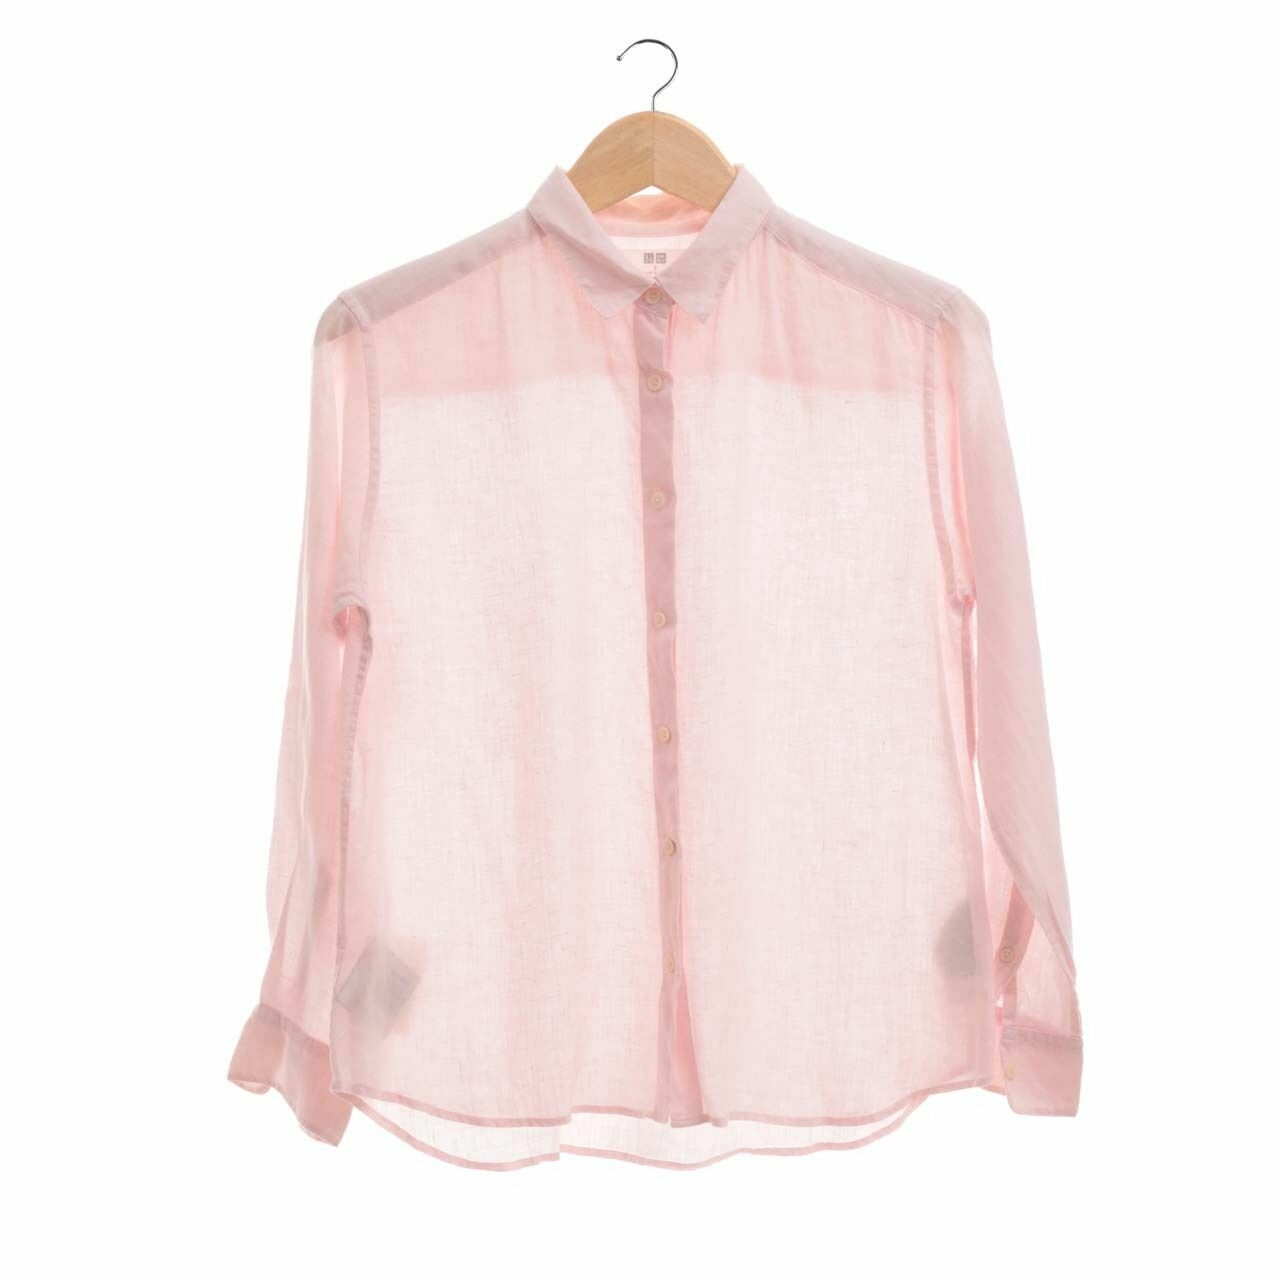 UNIQLO Pink Long Sleeve Shirt